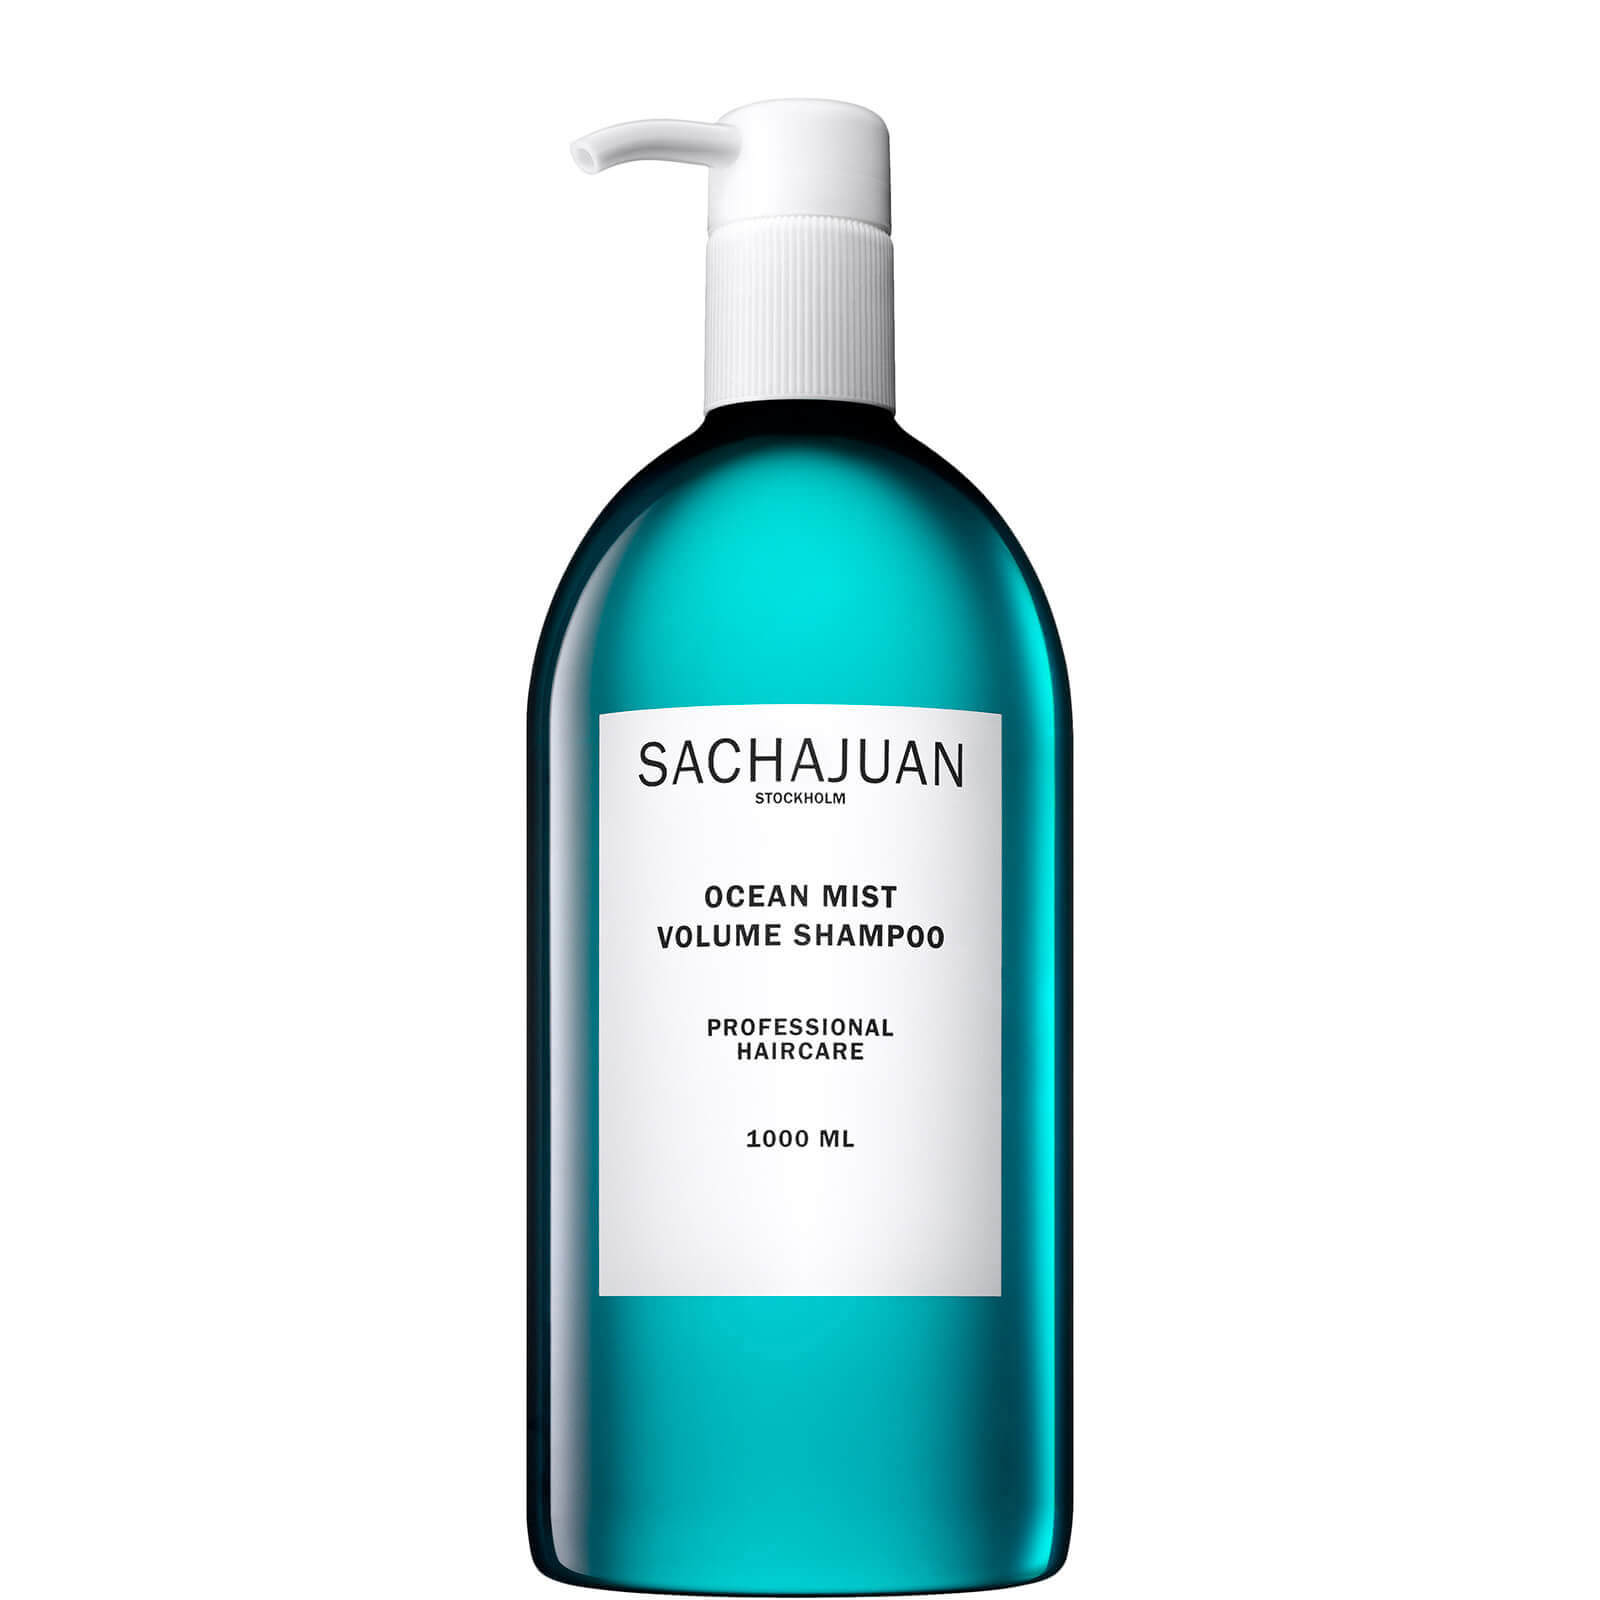 Sachajuan Ocean Mist Volume Shampoo 1000ml